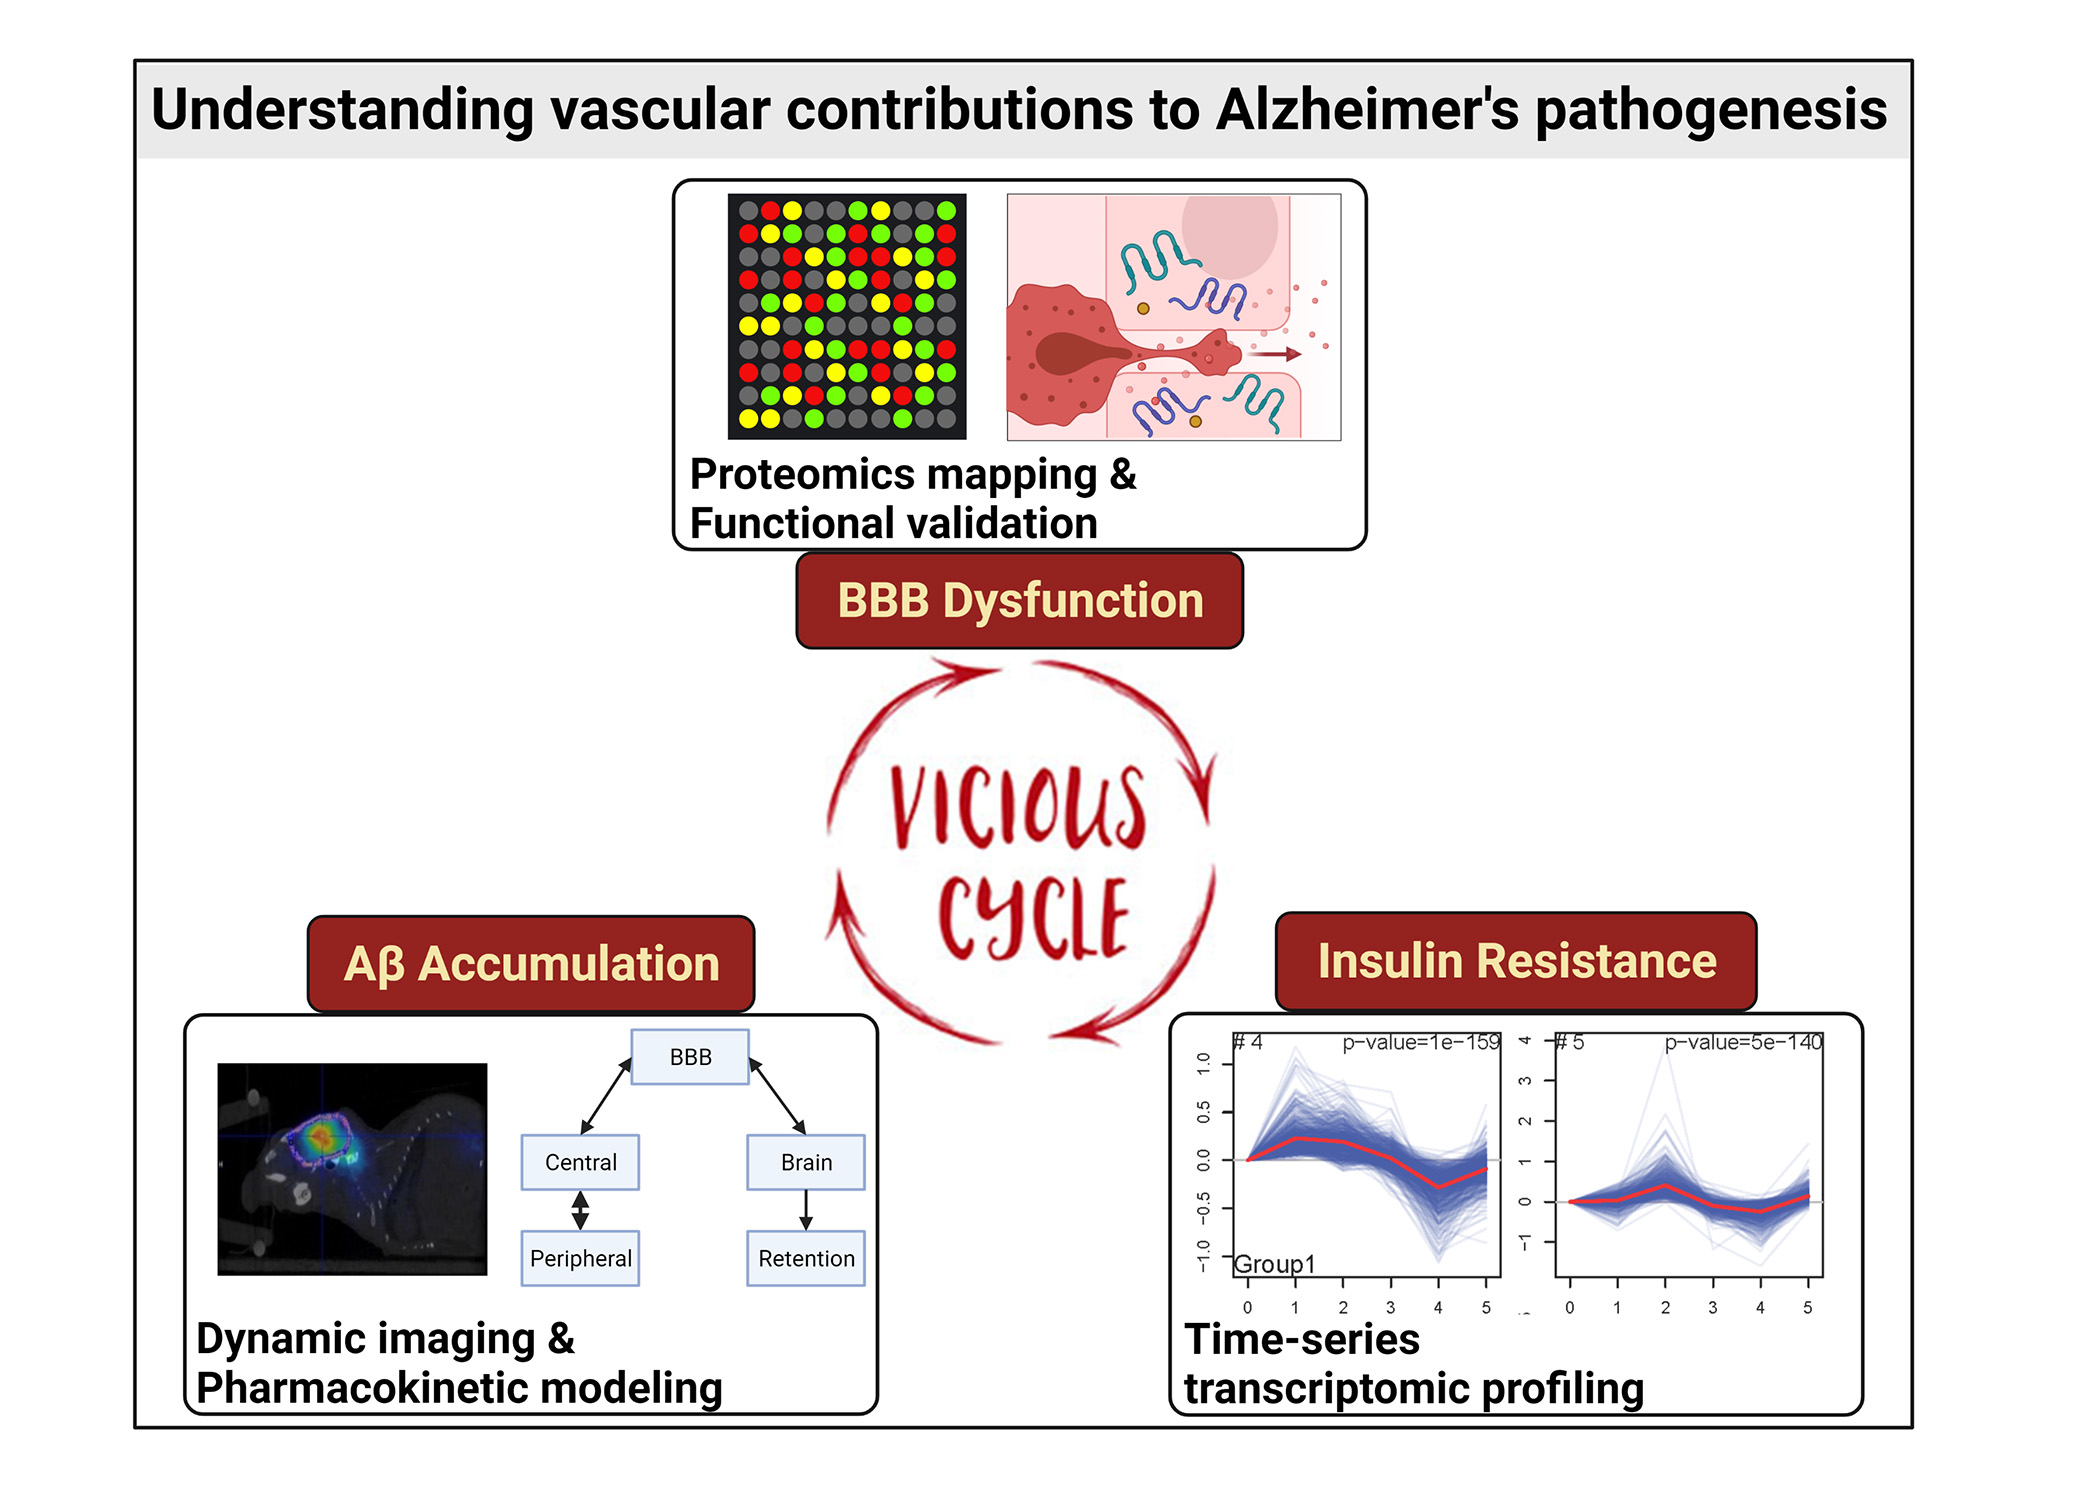 schematic of vascular contributions to Alzheimer's pathogenesis